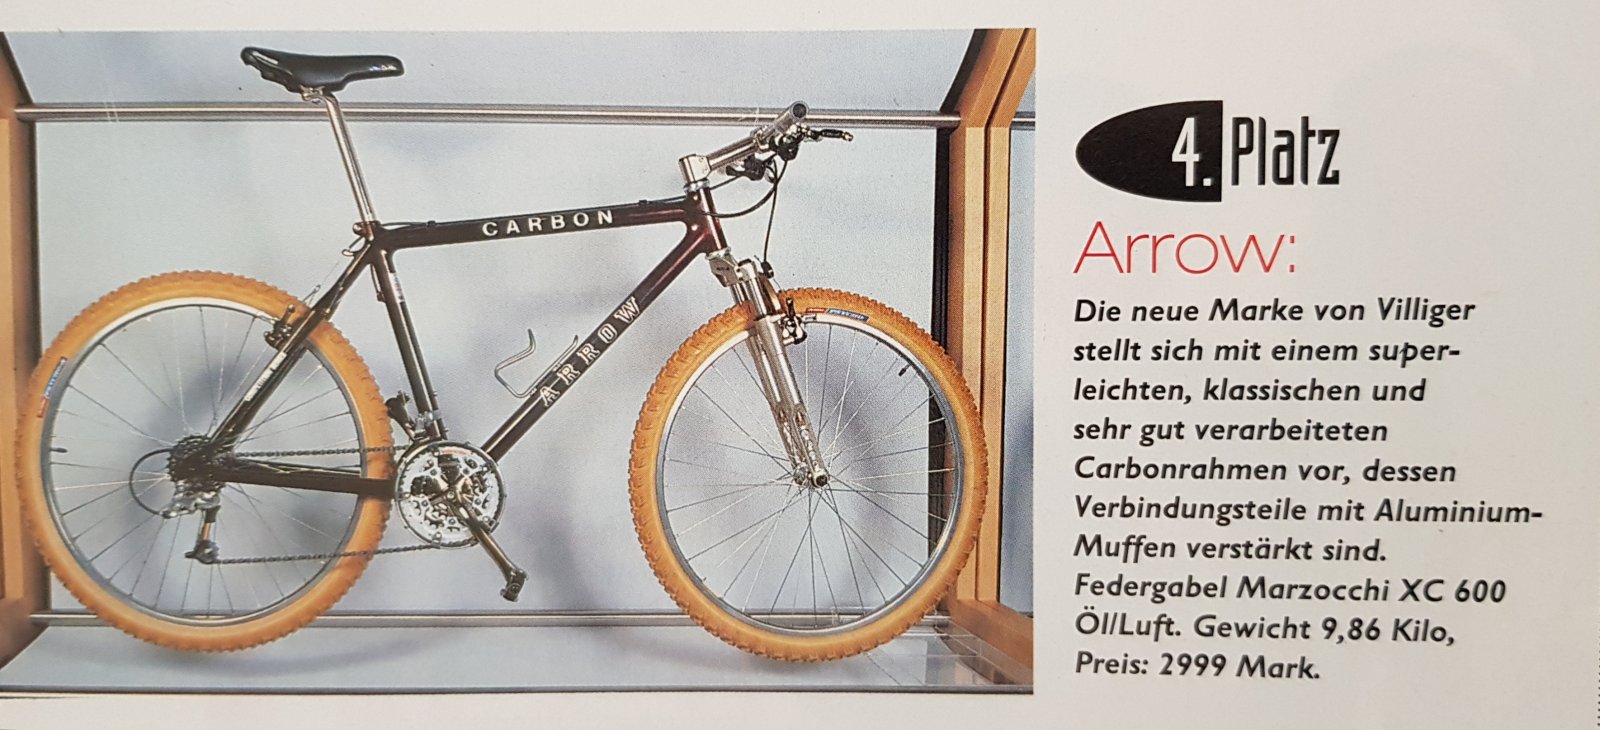 Arrow Carbon aus Bike 1994.jpg